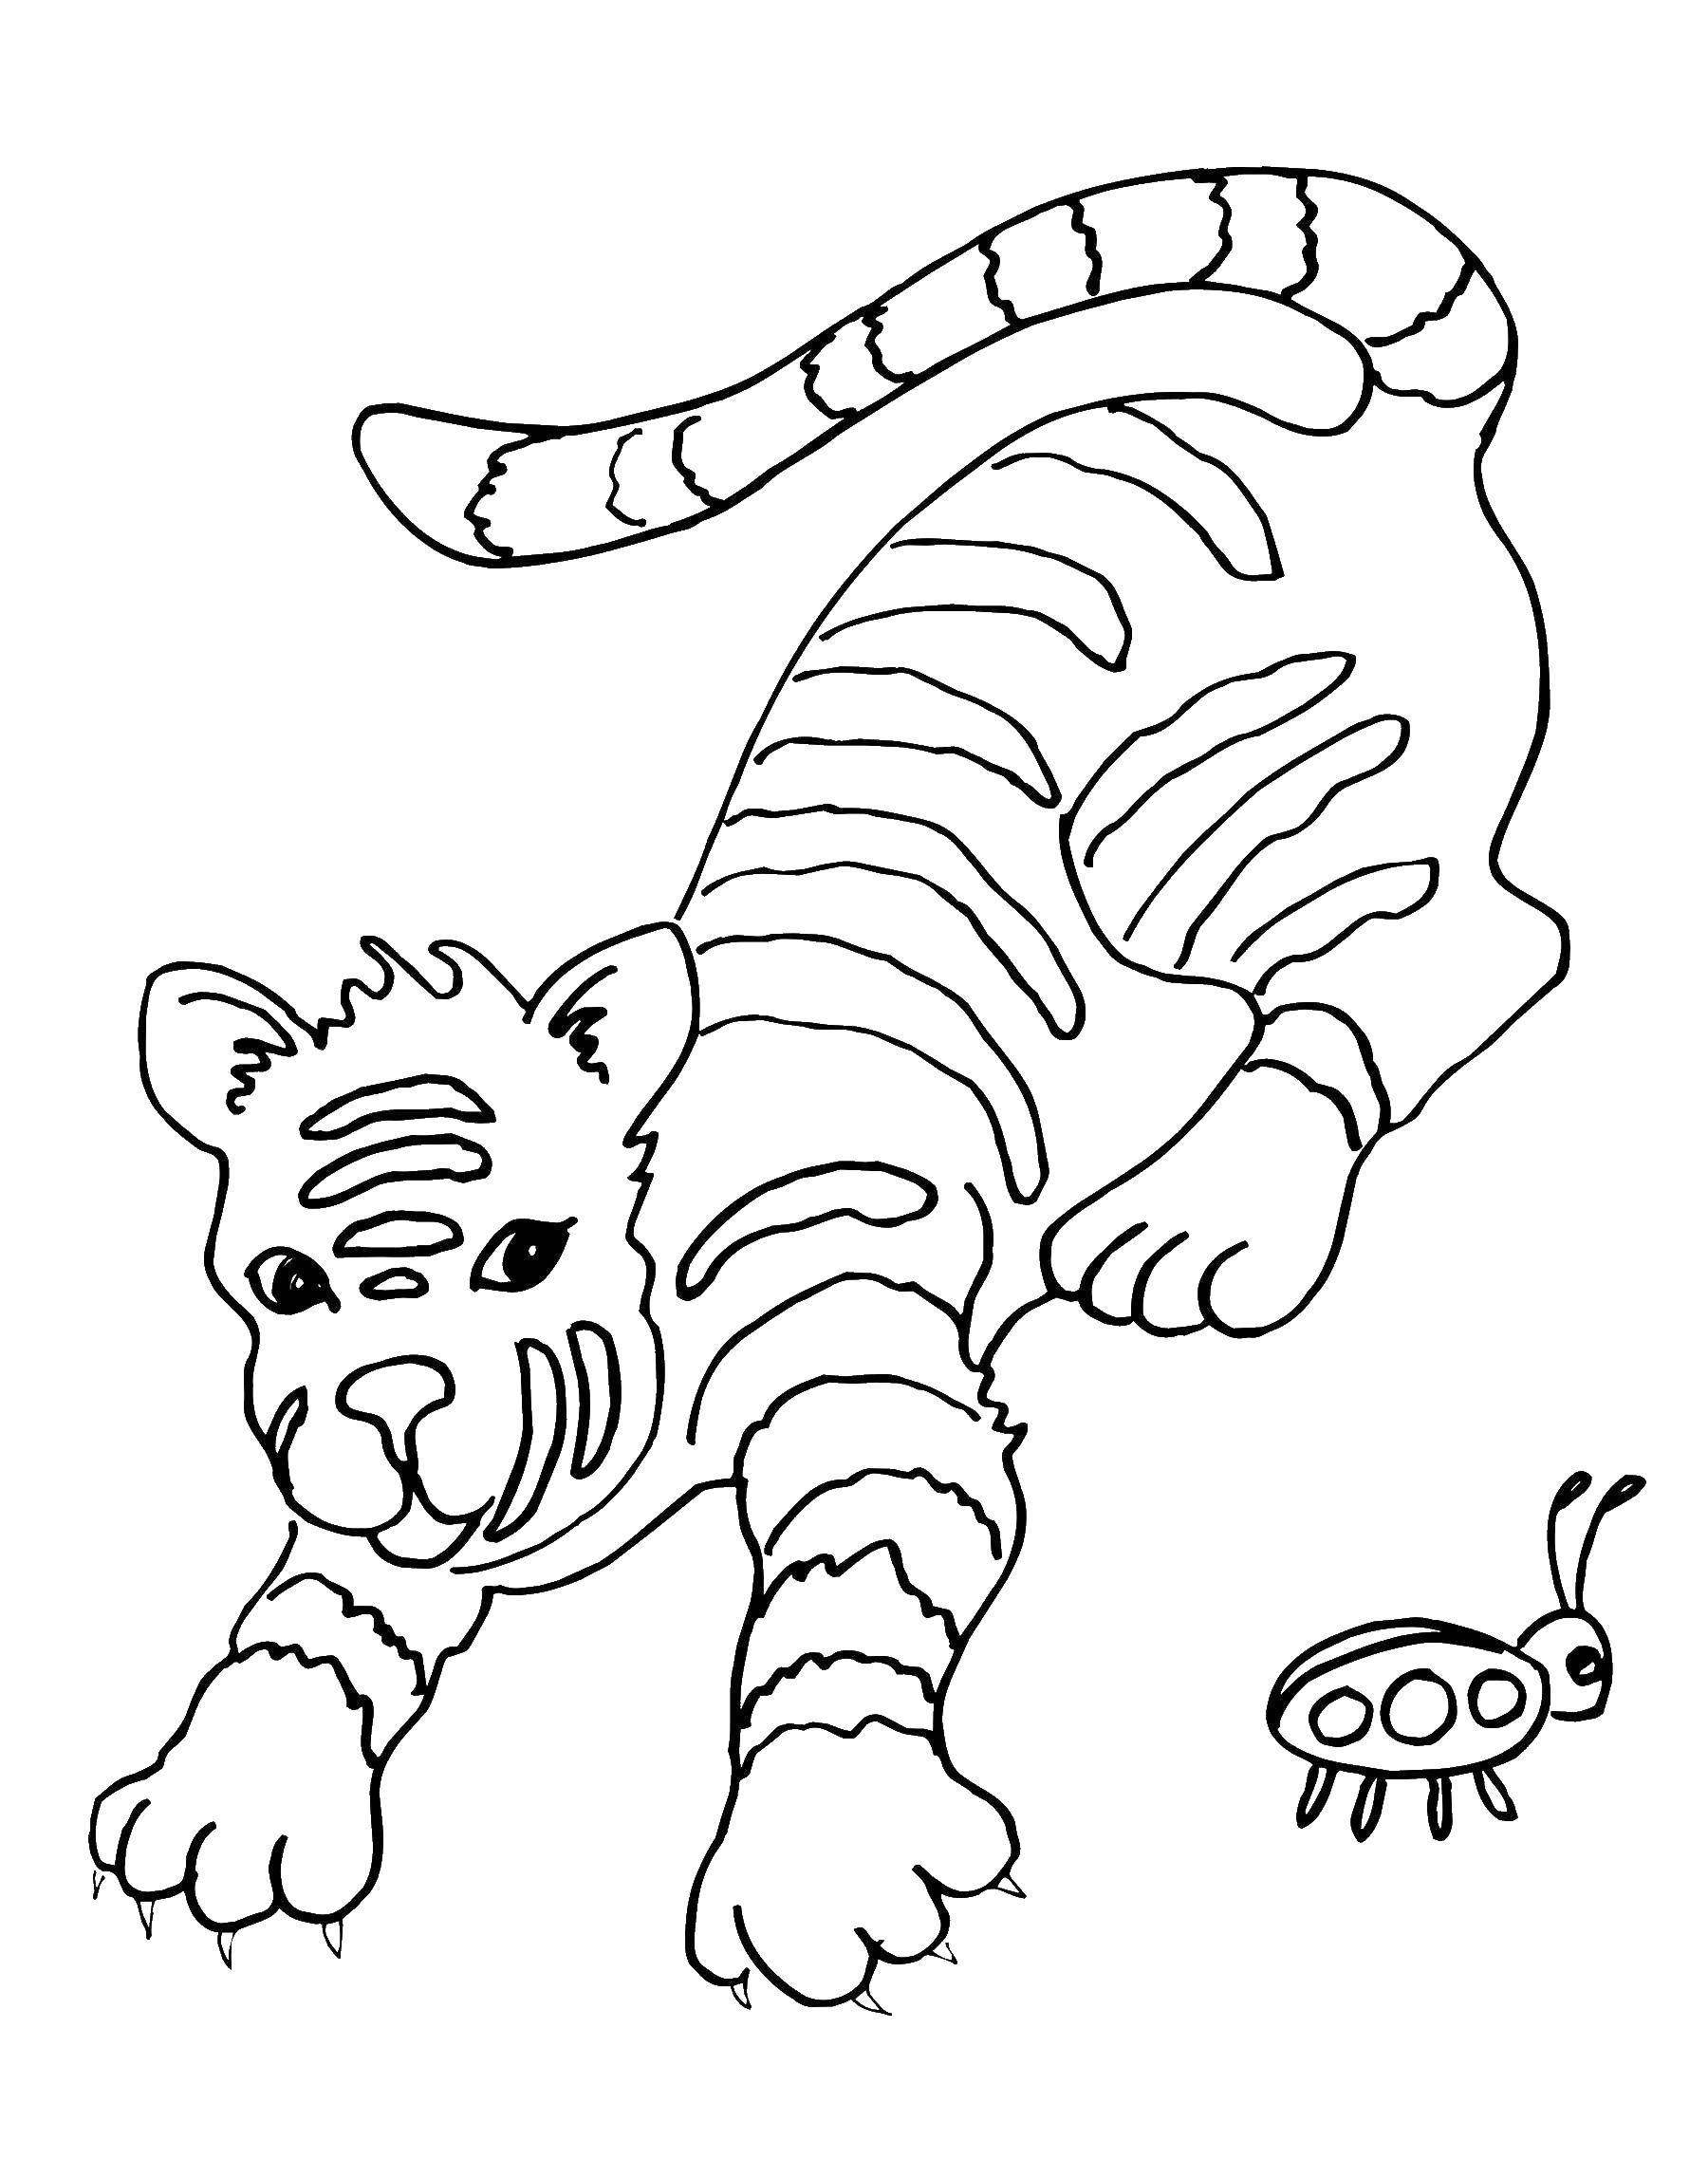 Опис: розмальовки  Смугастий тигр грає з сонечком. Категорія: Тварини. Теги:  смугастий тигр, .